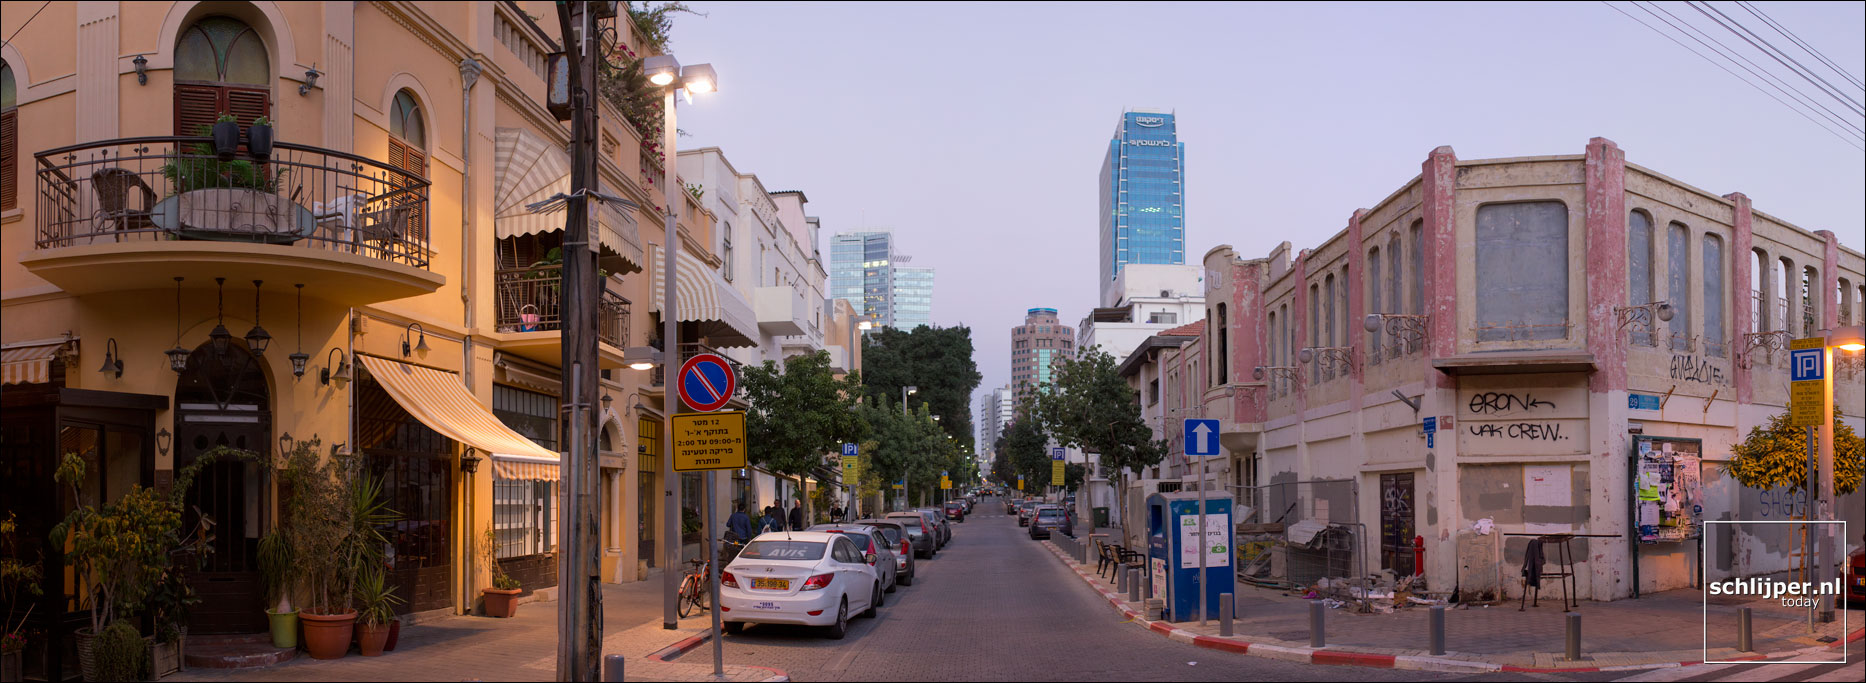 Israel, Tel Aviv, 26 november 2016